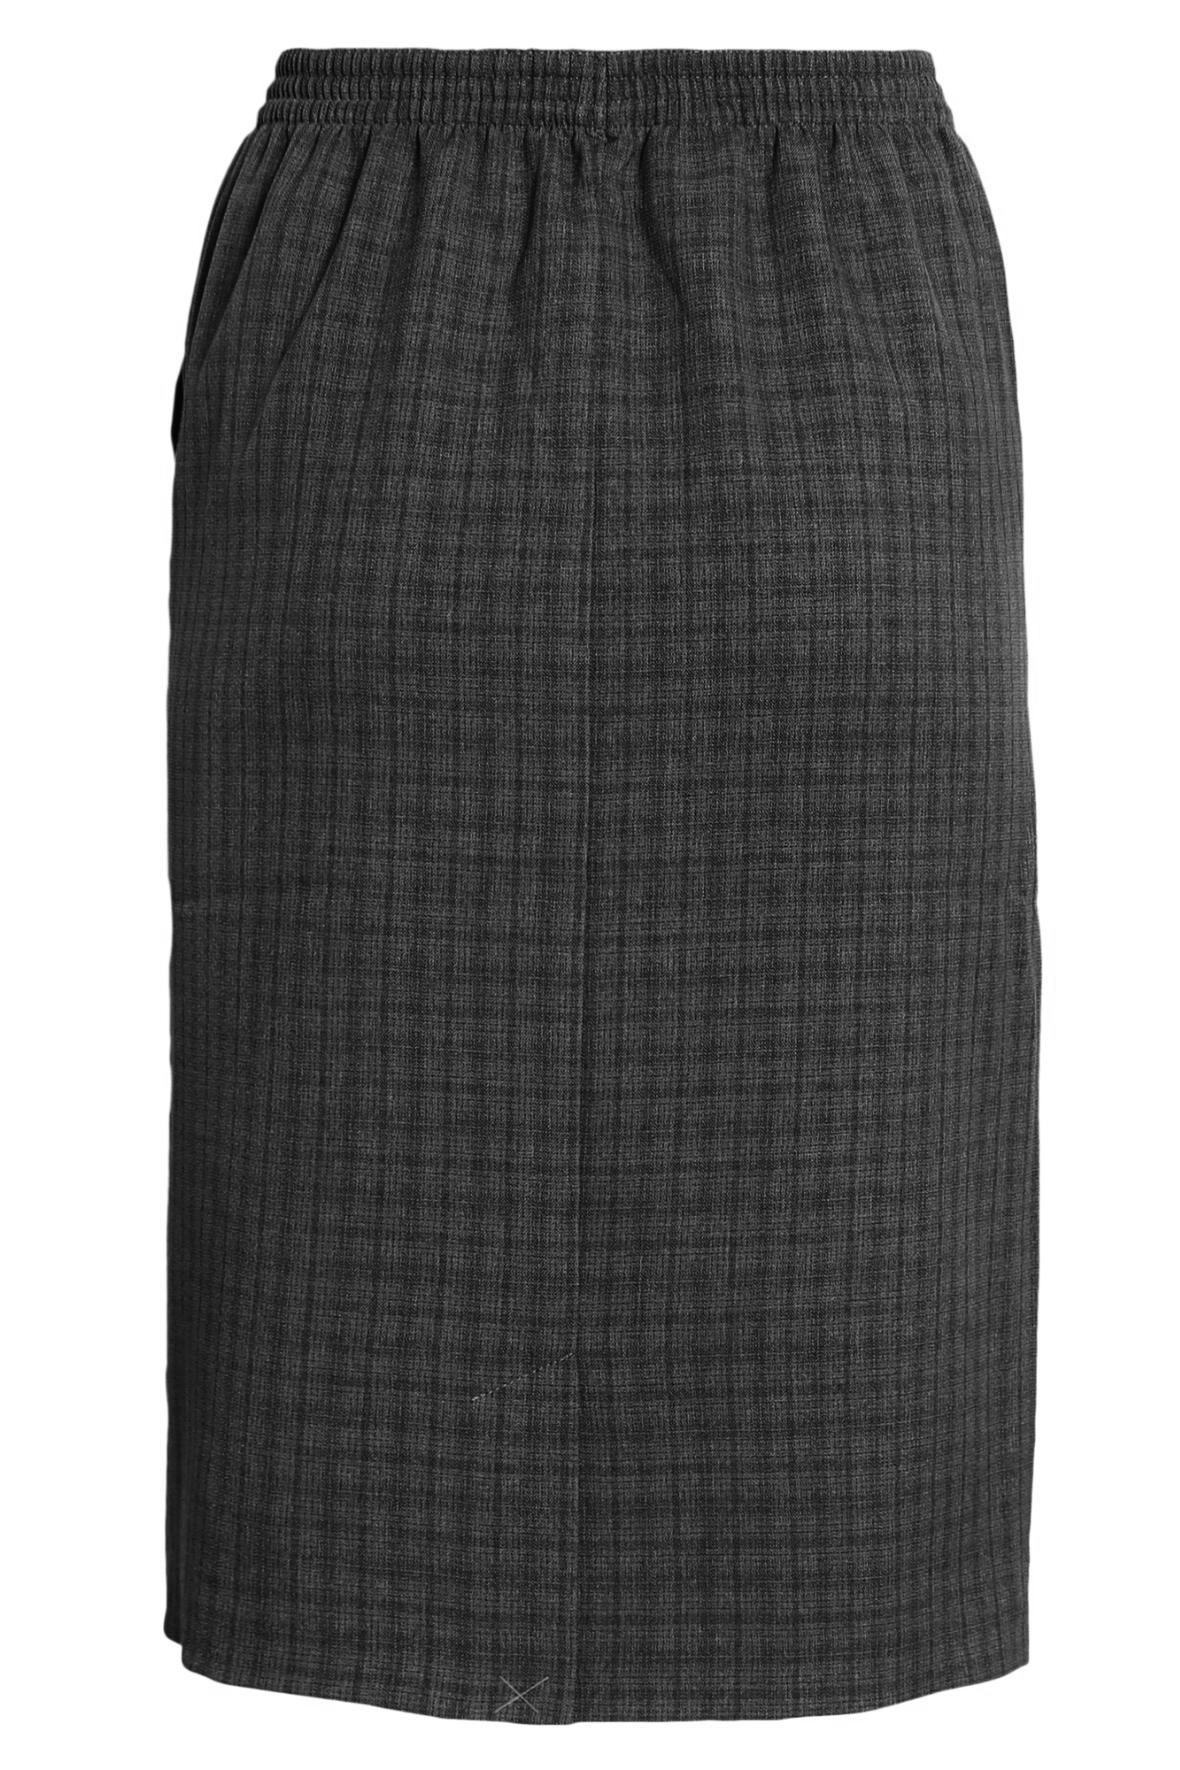 åbenbaring Uartig Søgemaskine markedsføring Brandtex nederdel - ternet mørkegrå med elastisk linning - Hos Lohse